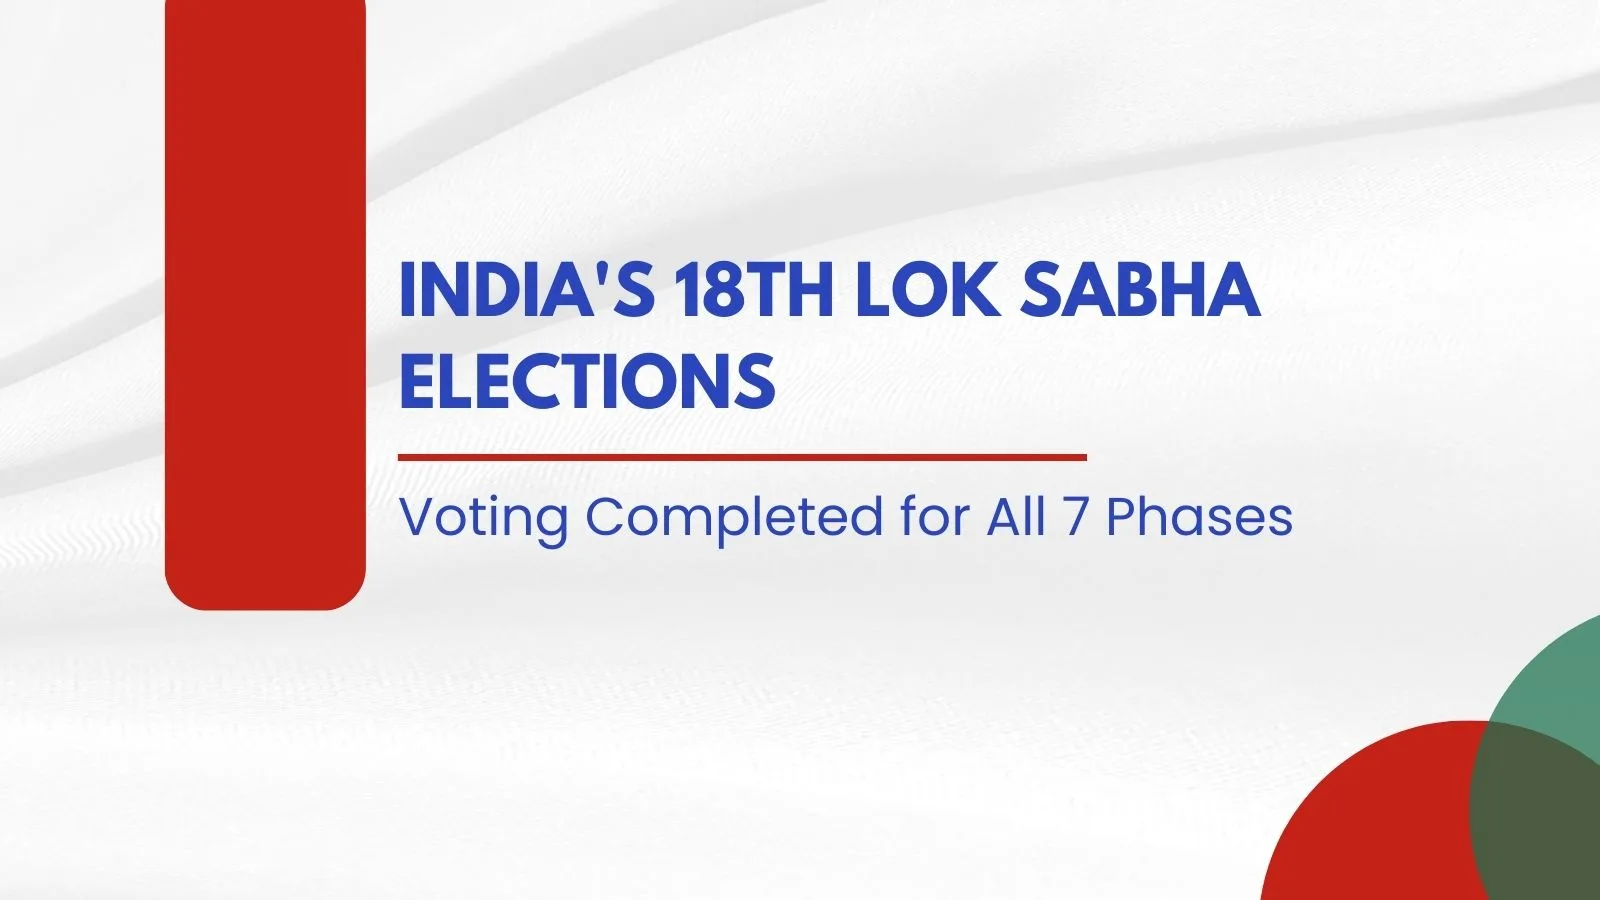 India's 18th Lok Sabha Elections: A Proud Celebration of Democracy